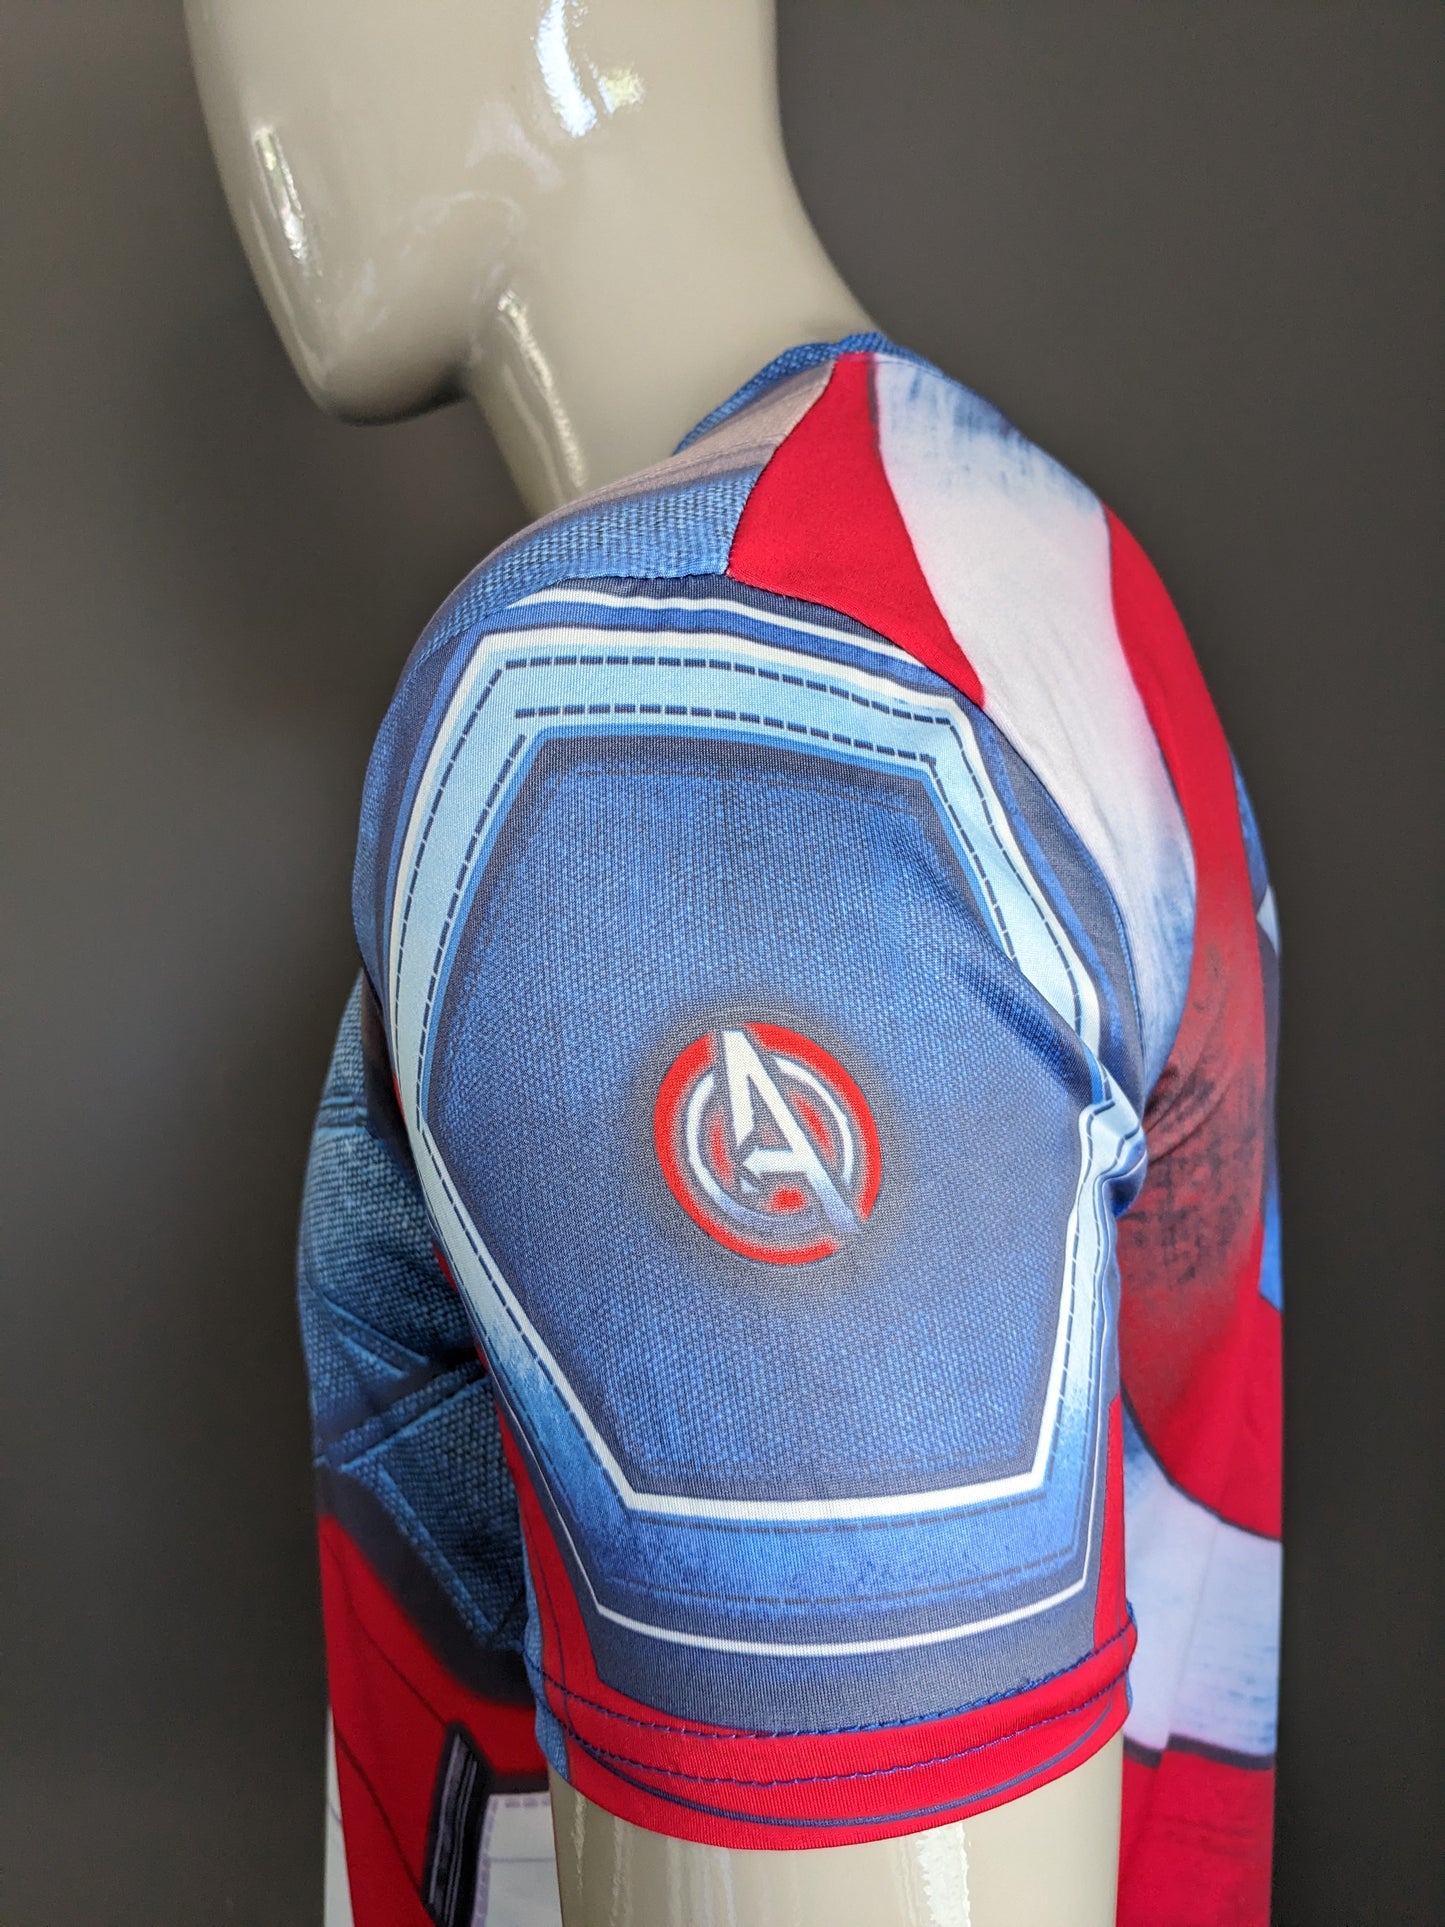 Captain America Shirt. Rotweißblau. Größe M / L. Stretch.